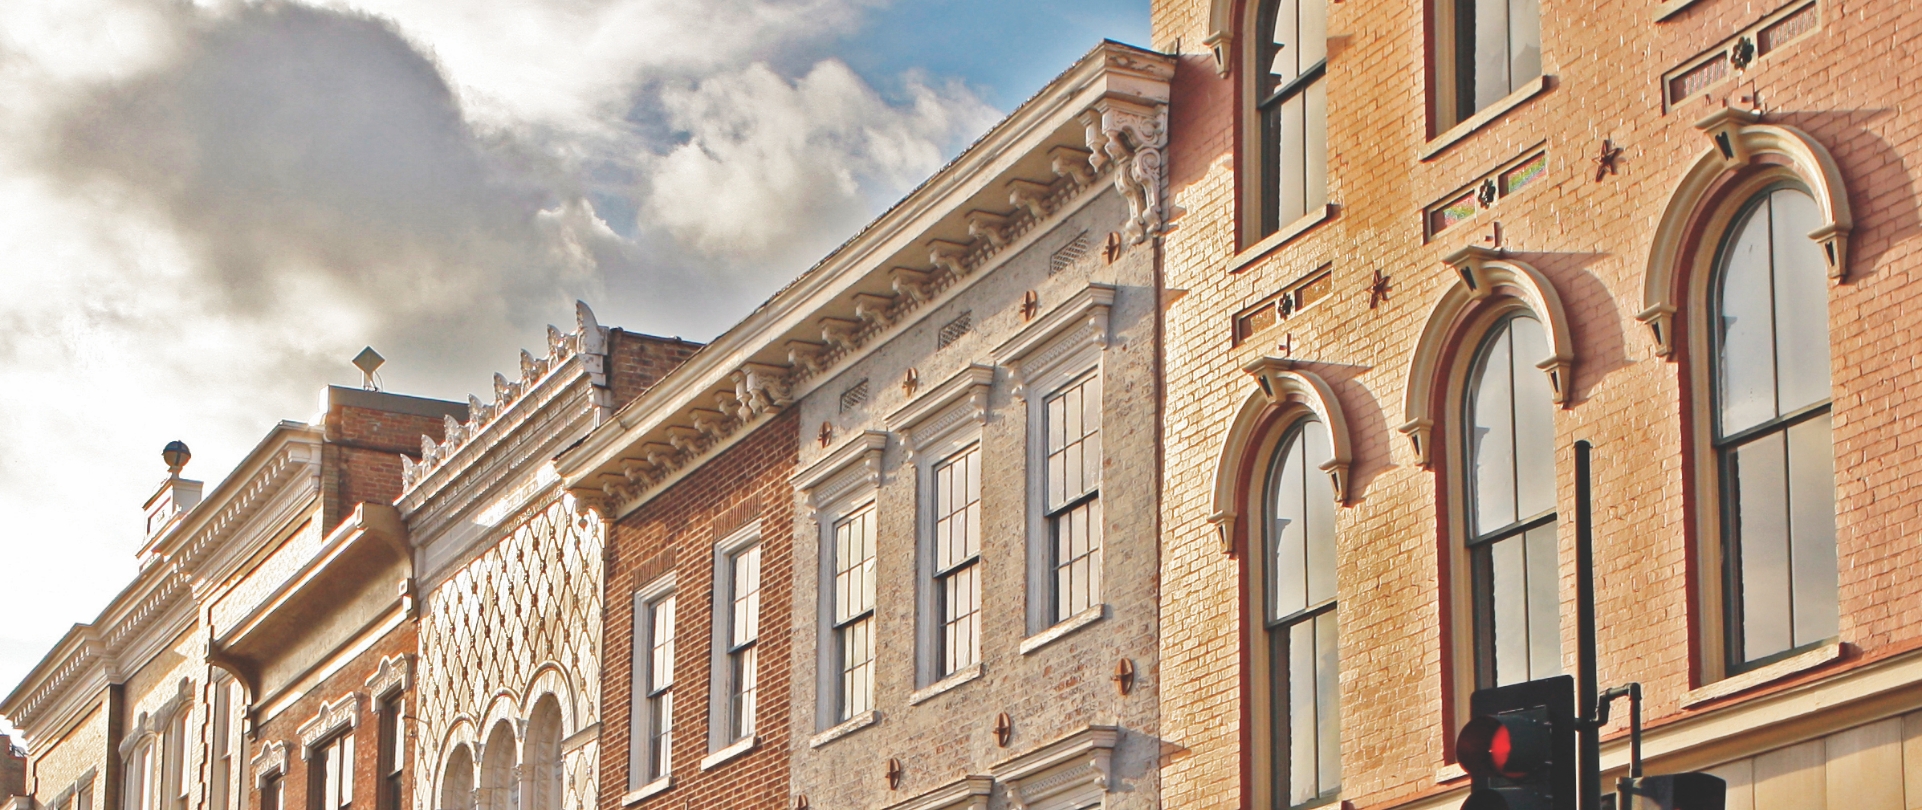 Brick facades of historical buildings in downtown Staunton Virginia line the street. 